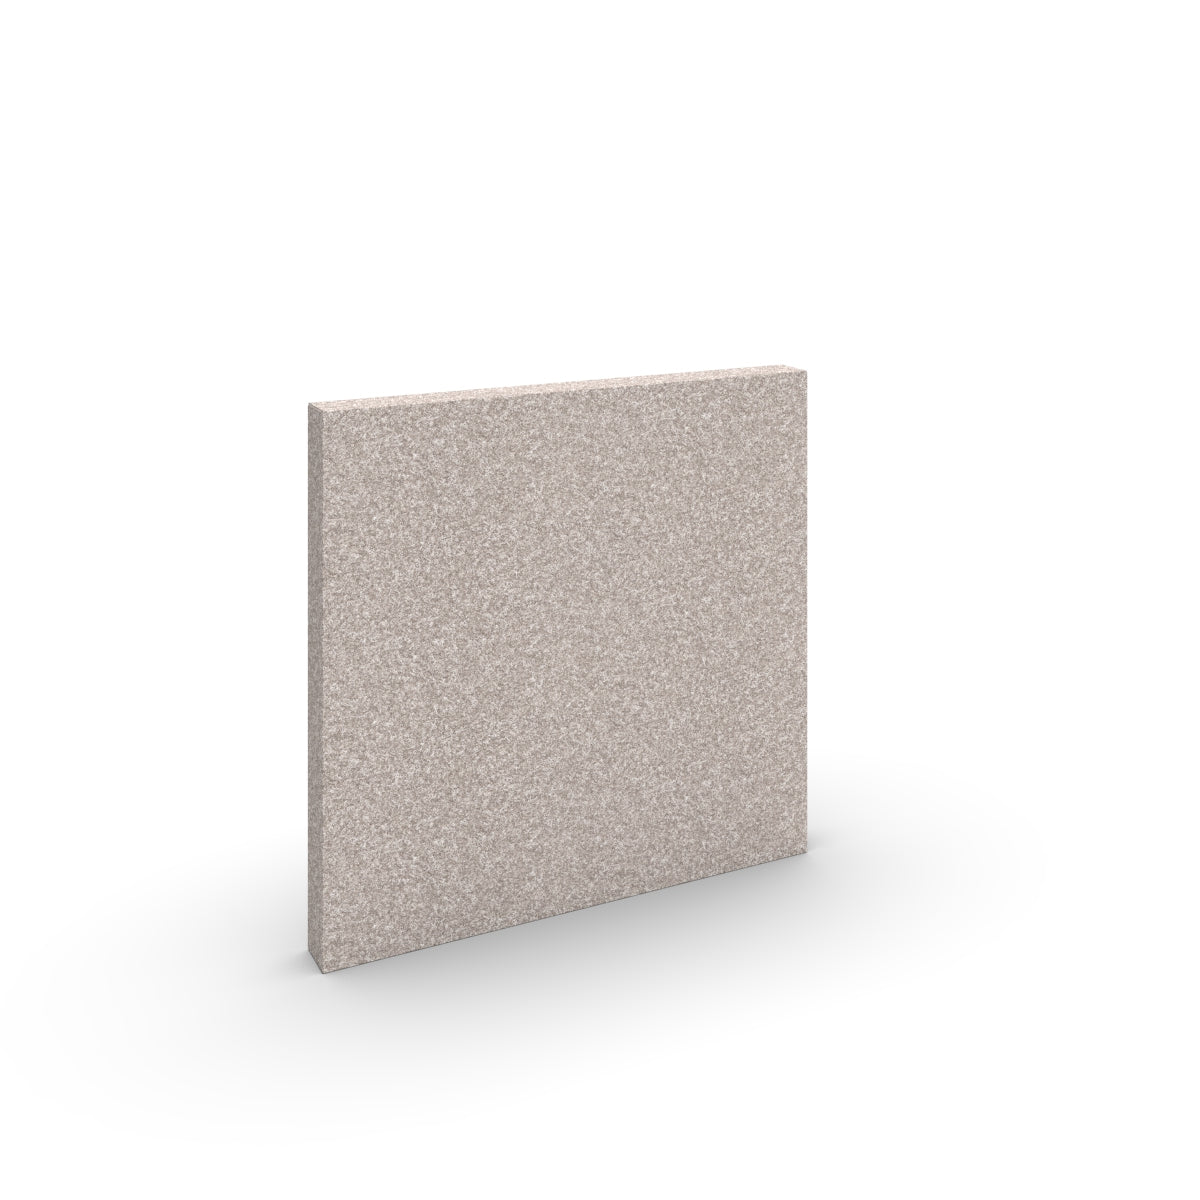 Square Basic wall sound absorber in dark beige acoustic wool felt. Akustikkplater og lyddemping vegg